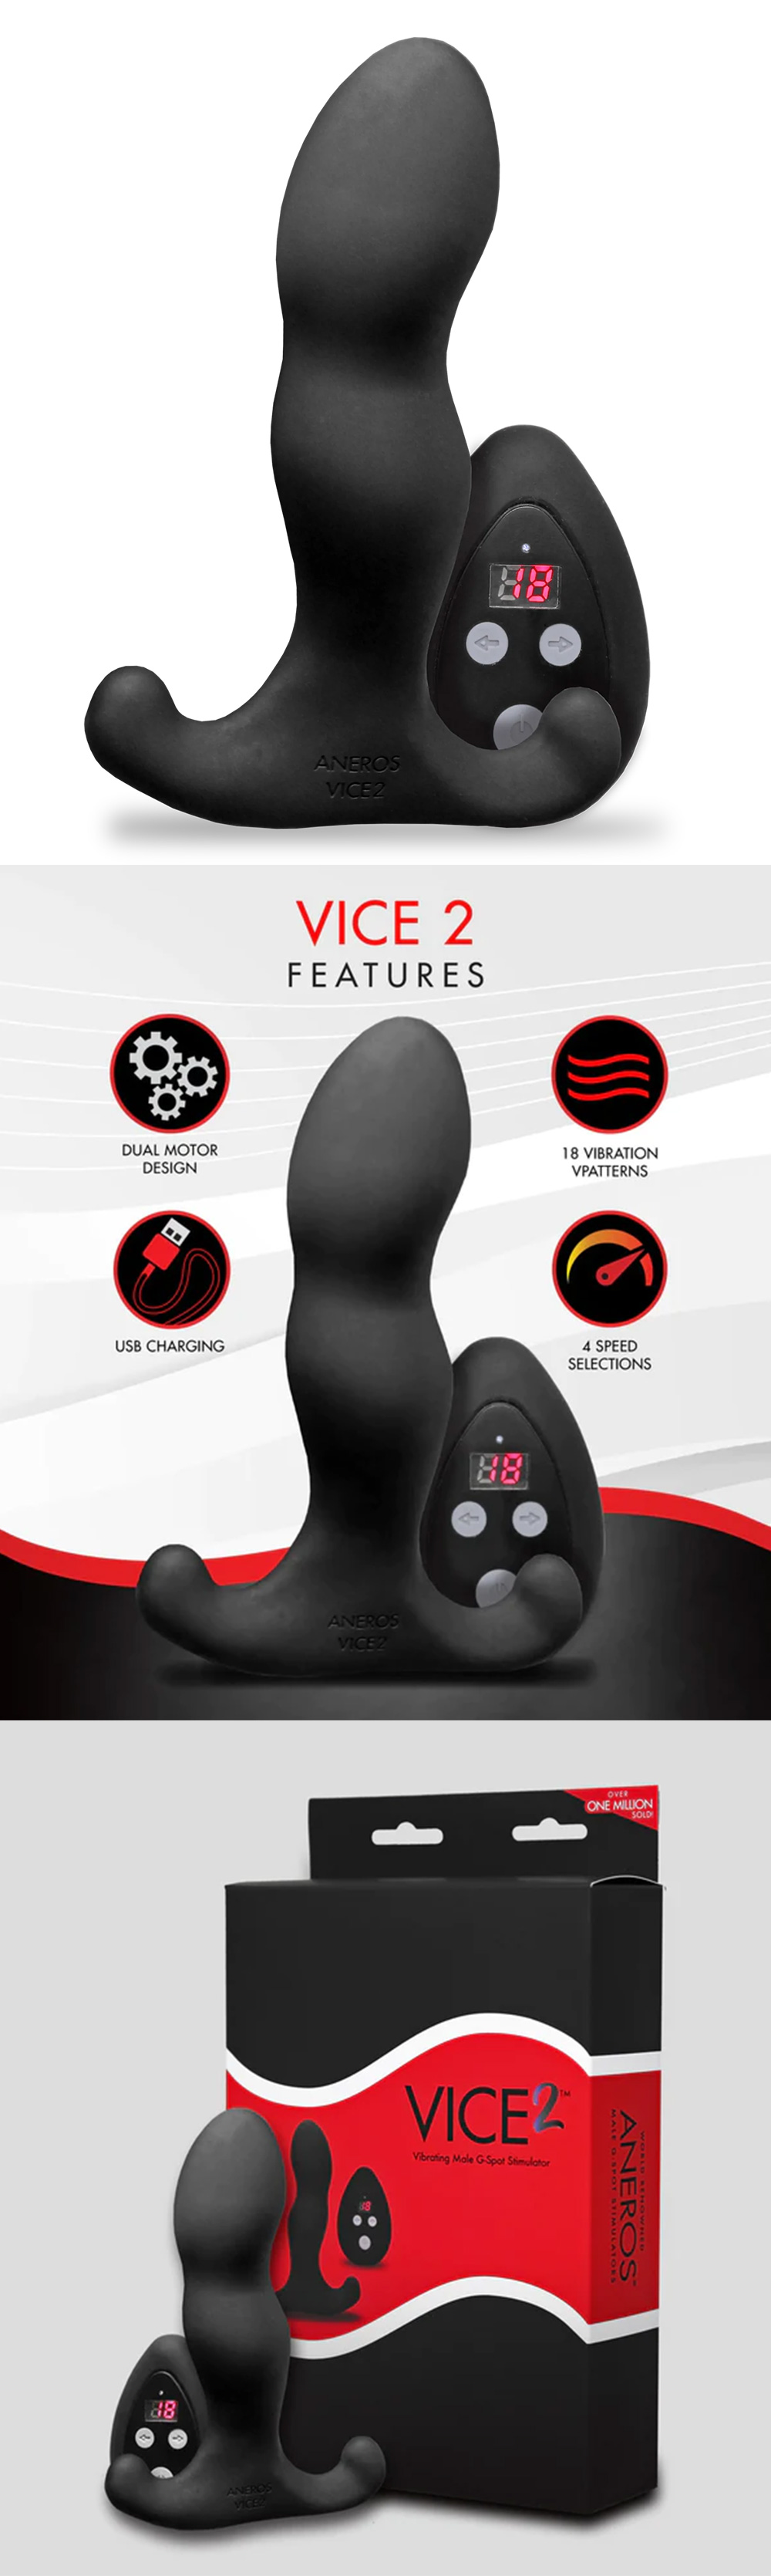 Aneros Vice 2 Remote Vibrating Prostate Massager